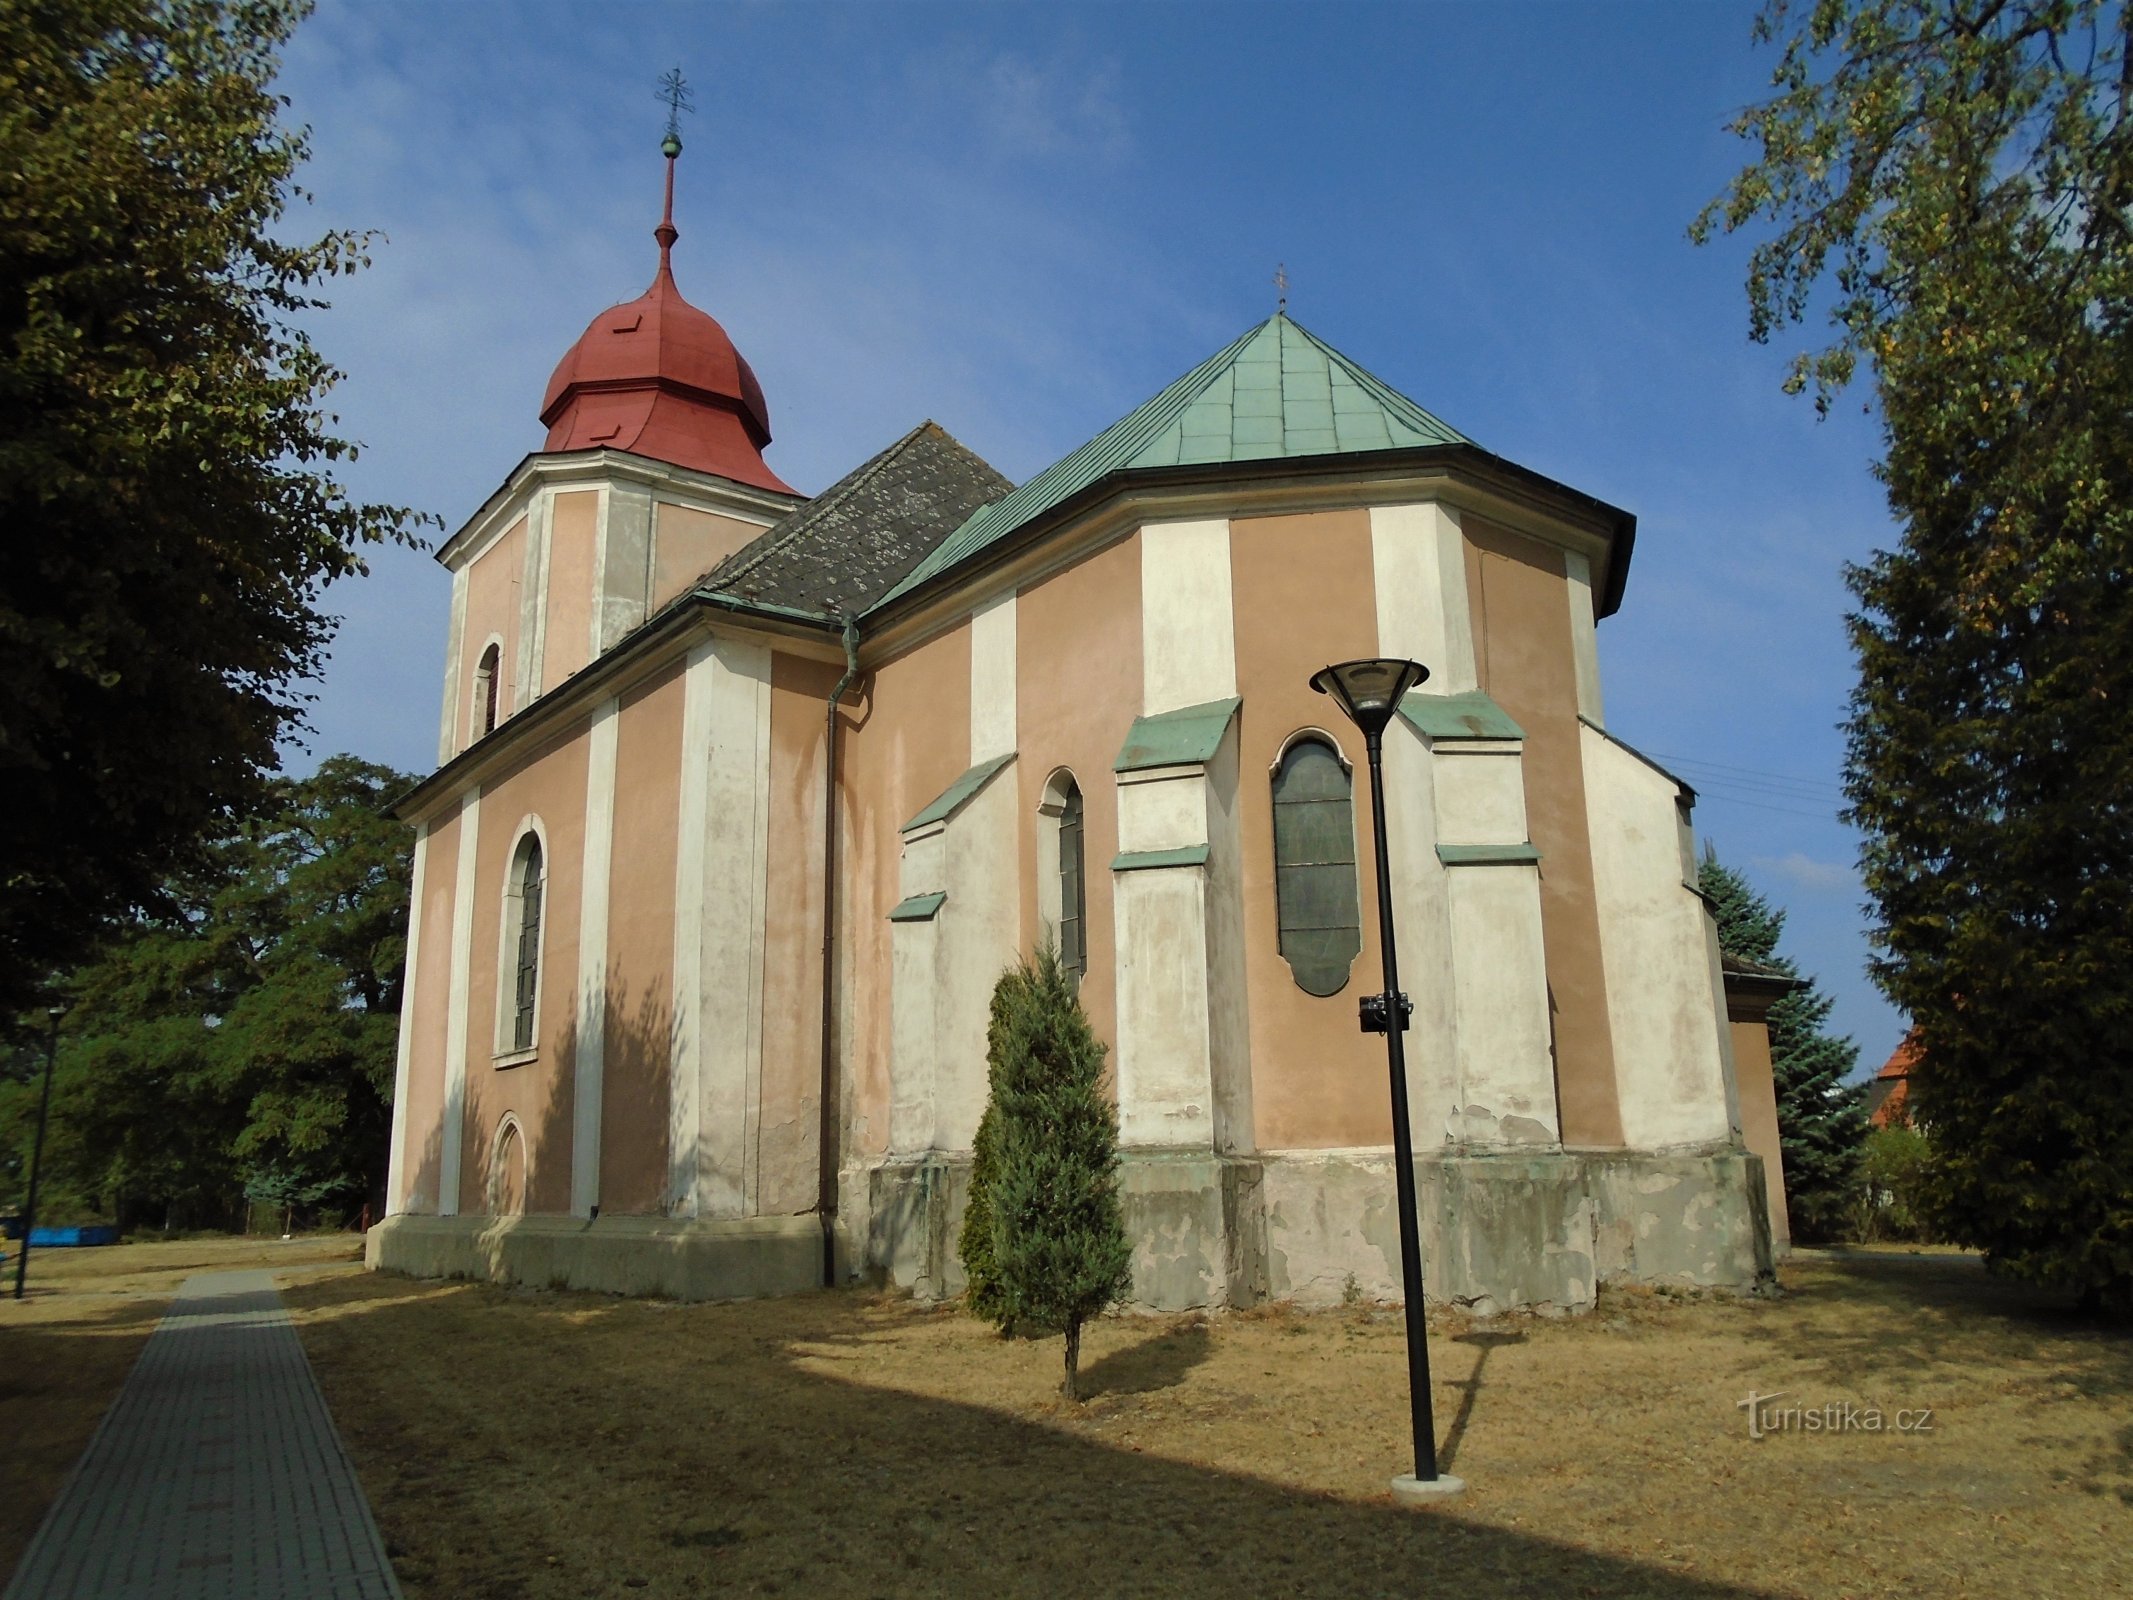 Kerk van St. Petrus en Paulus, de apostelen (Rohovládova Bělá, 31.8.2018 augustus XNUMX)